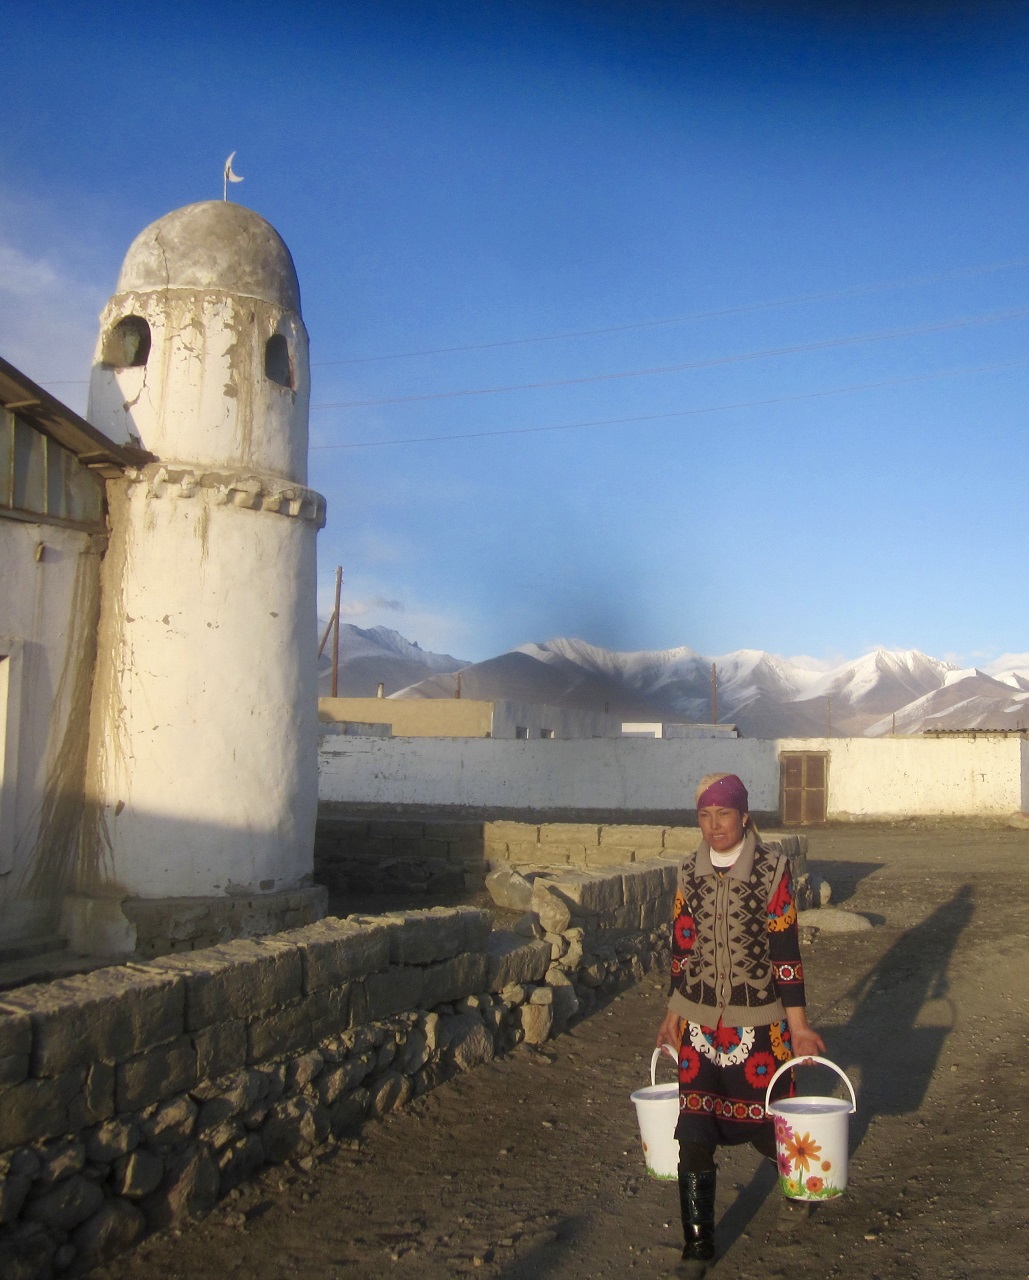 Mountain Biking Holidays Tajikistan